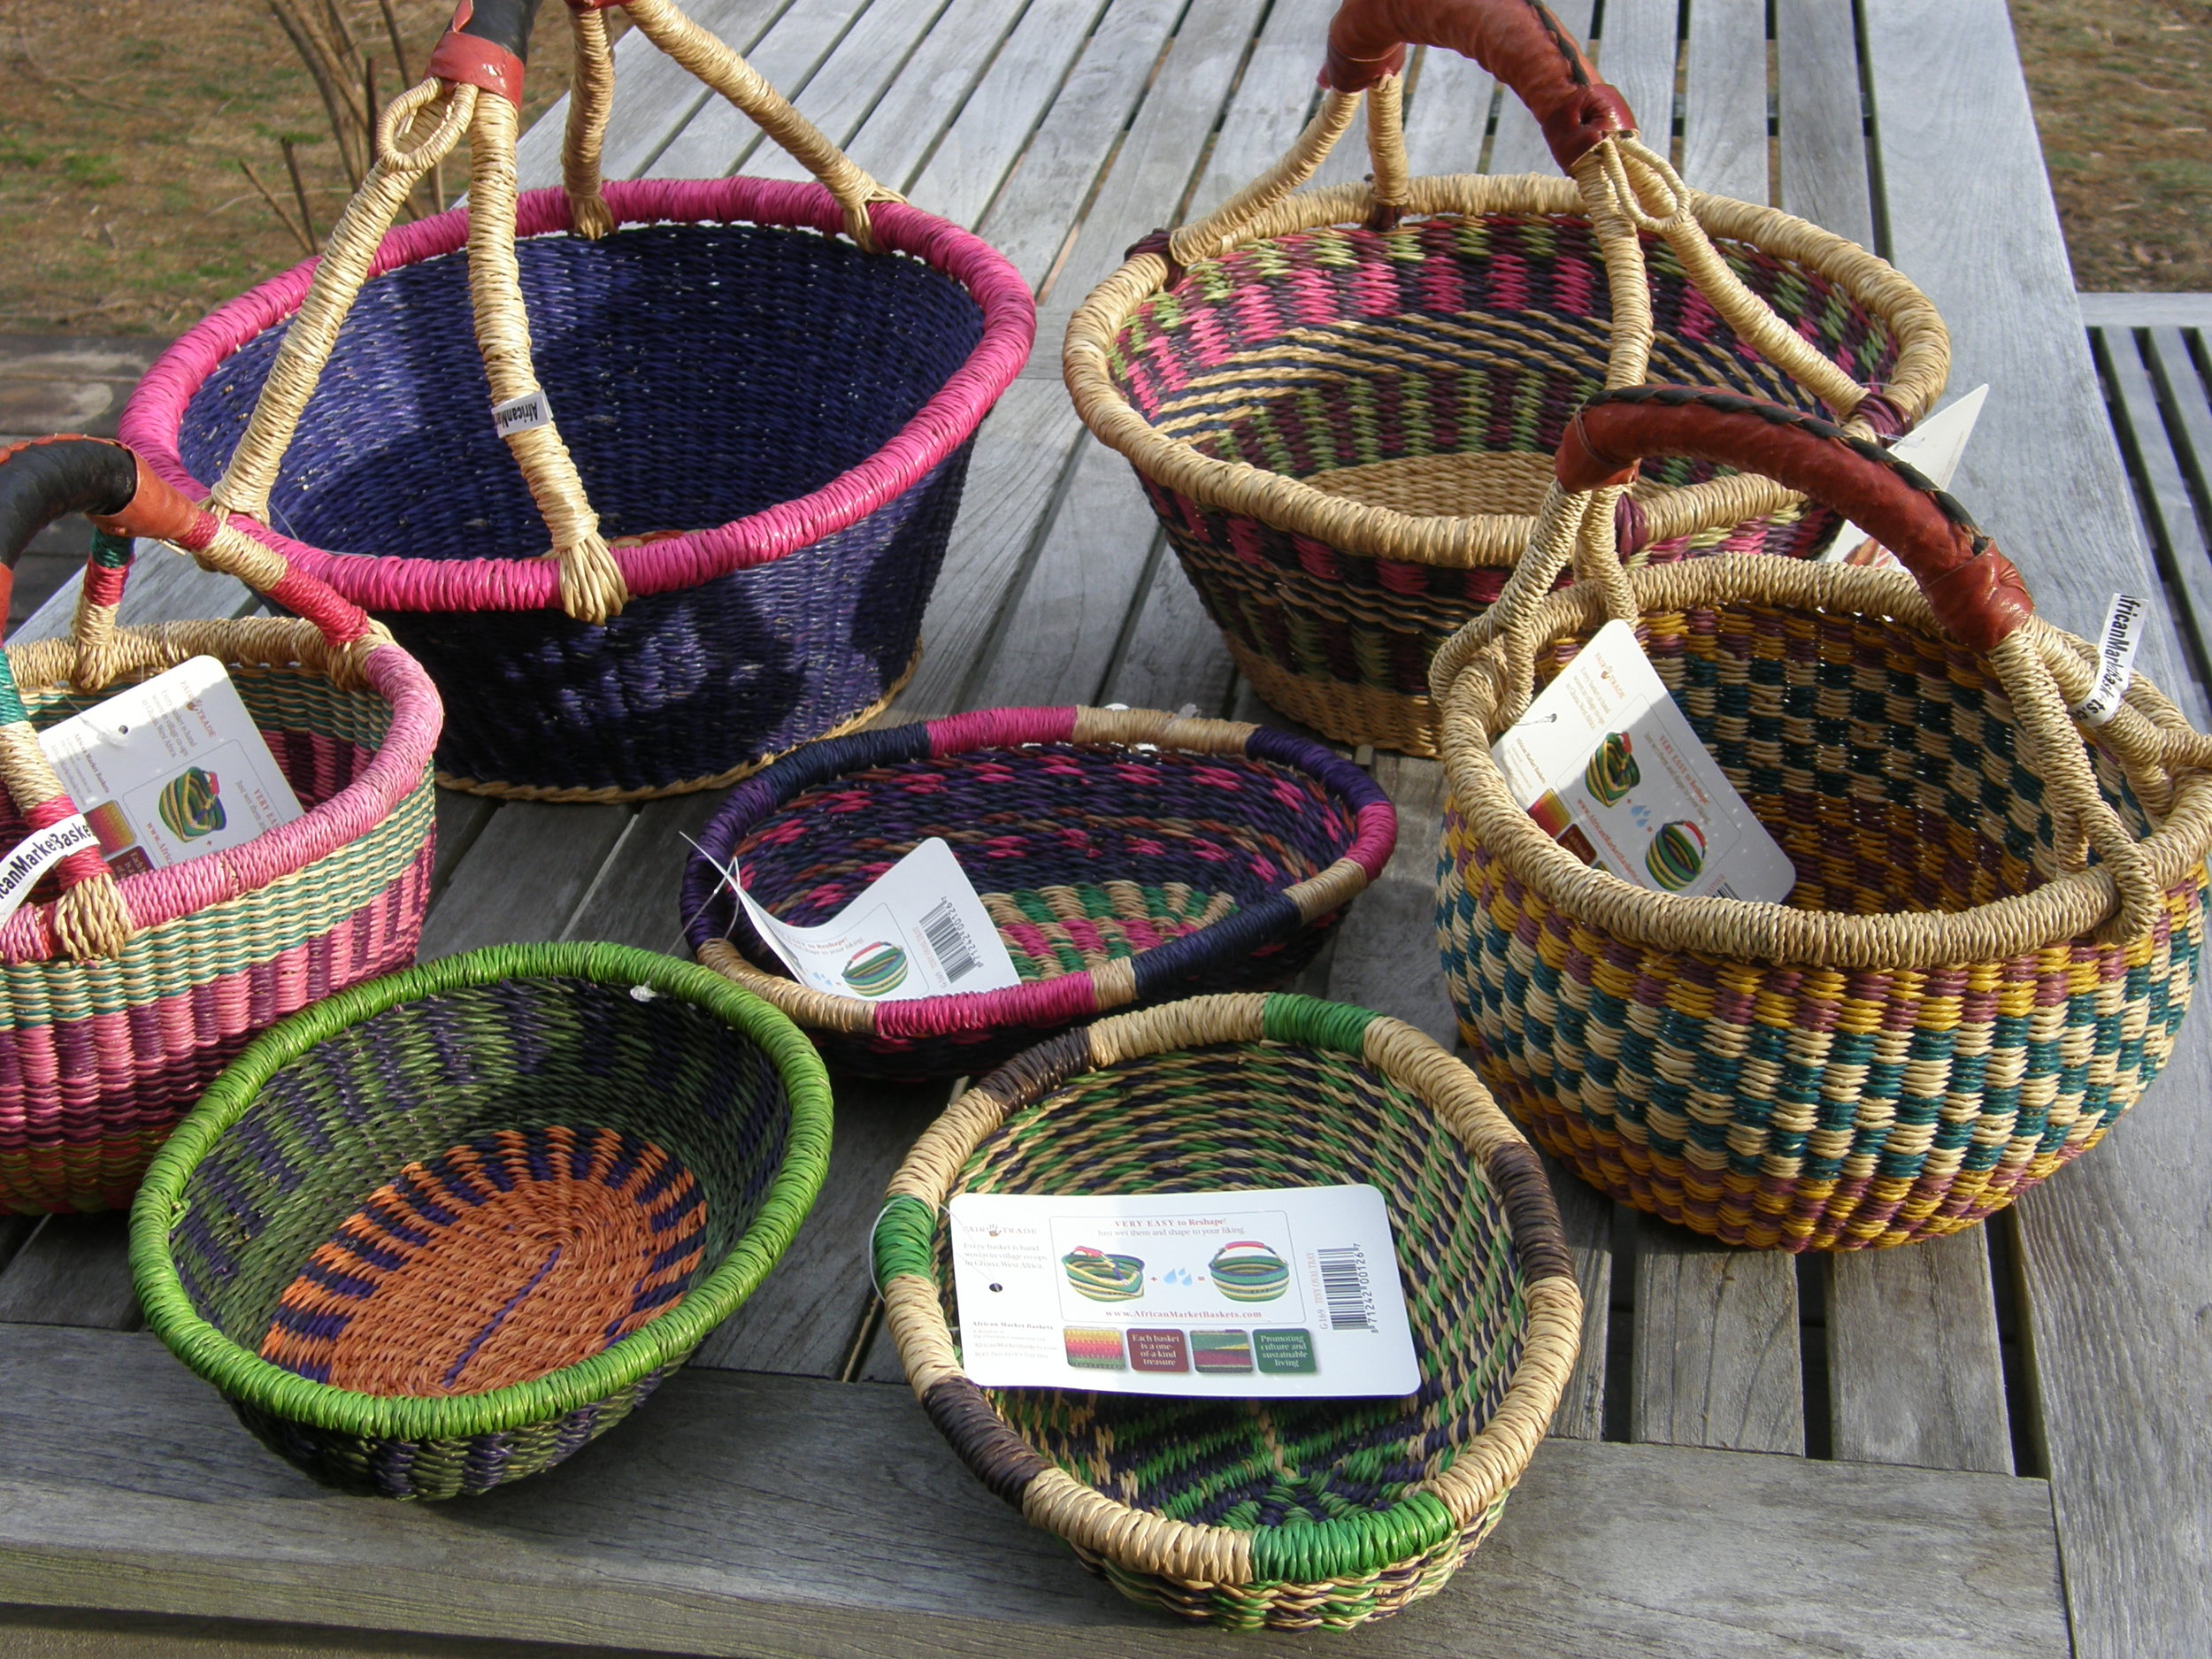 Fairtrade Large Woven Plastic Baskets